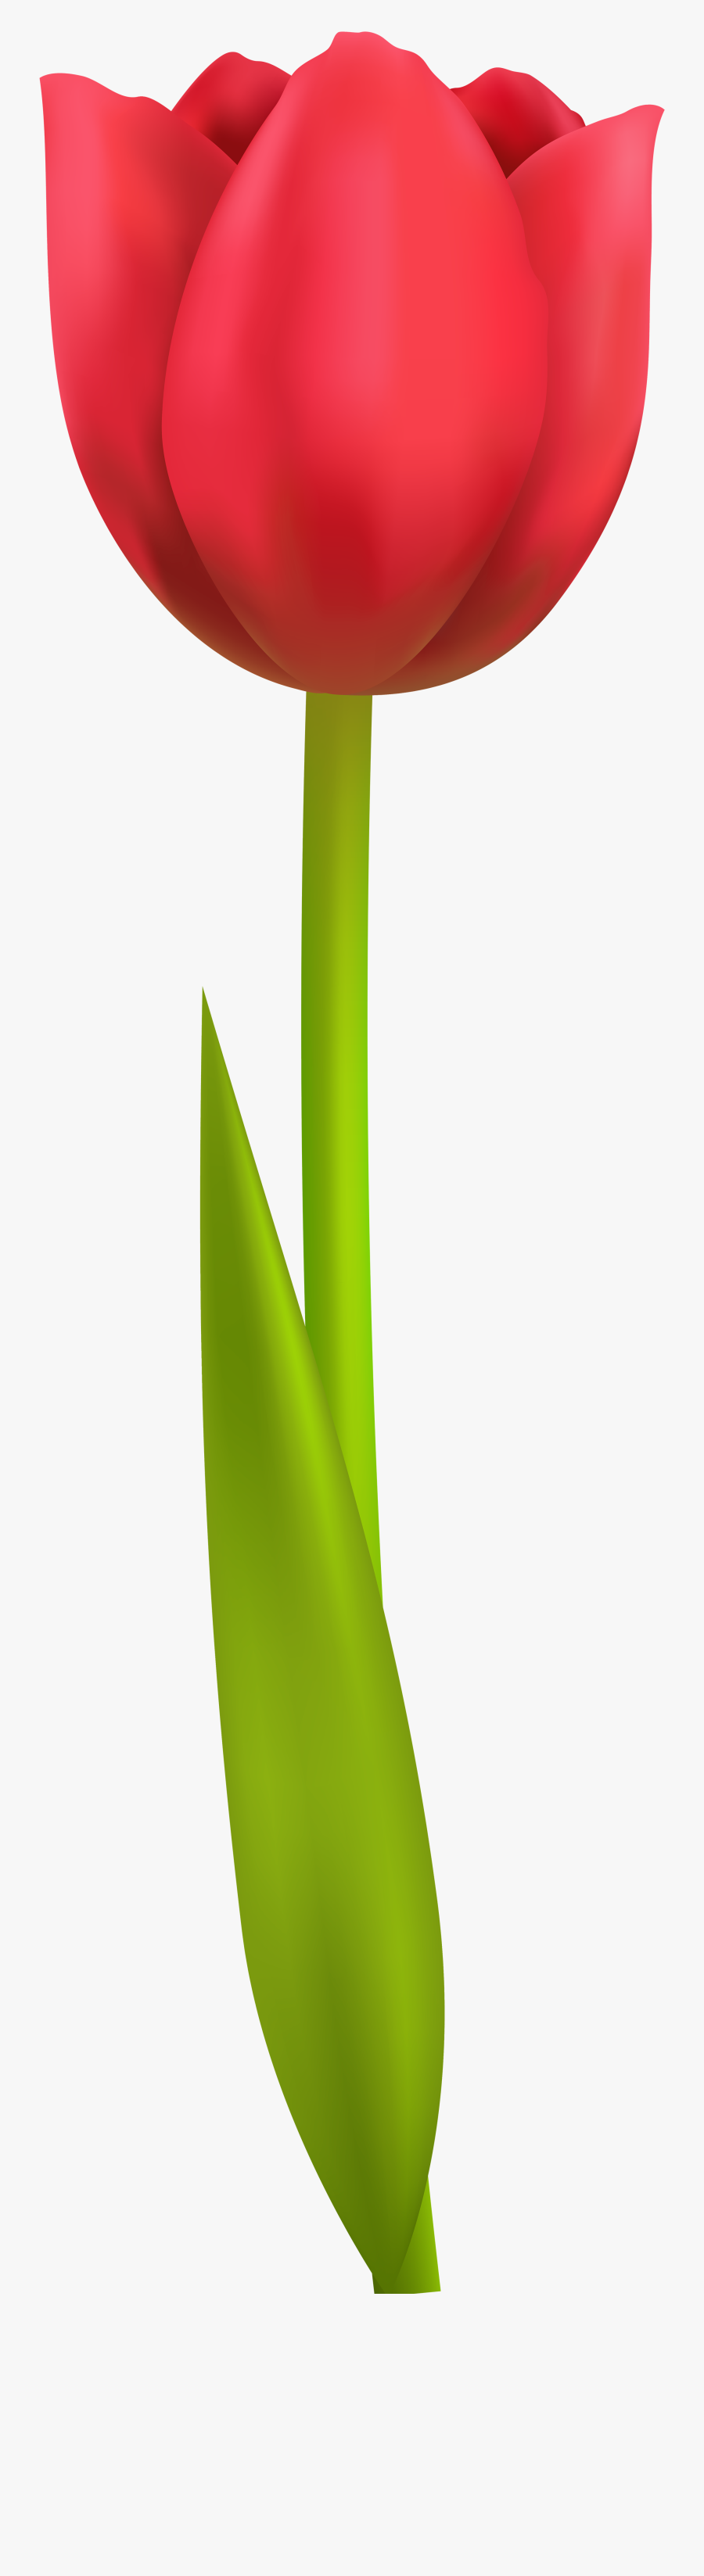 Tulip Png Transparent Clip - Clipart Tulip, Transparent Clipart